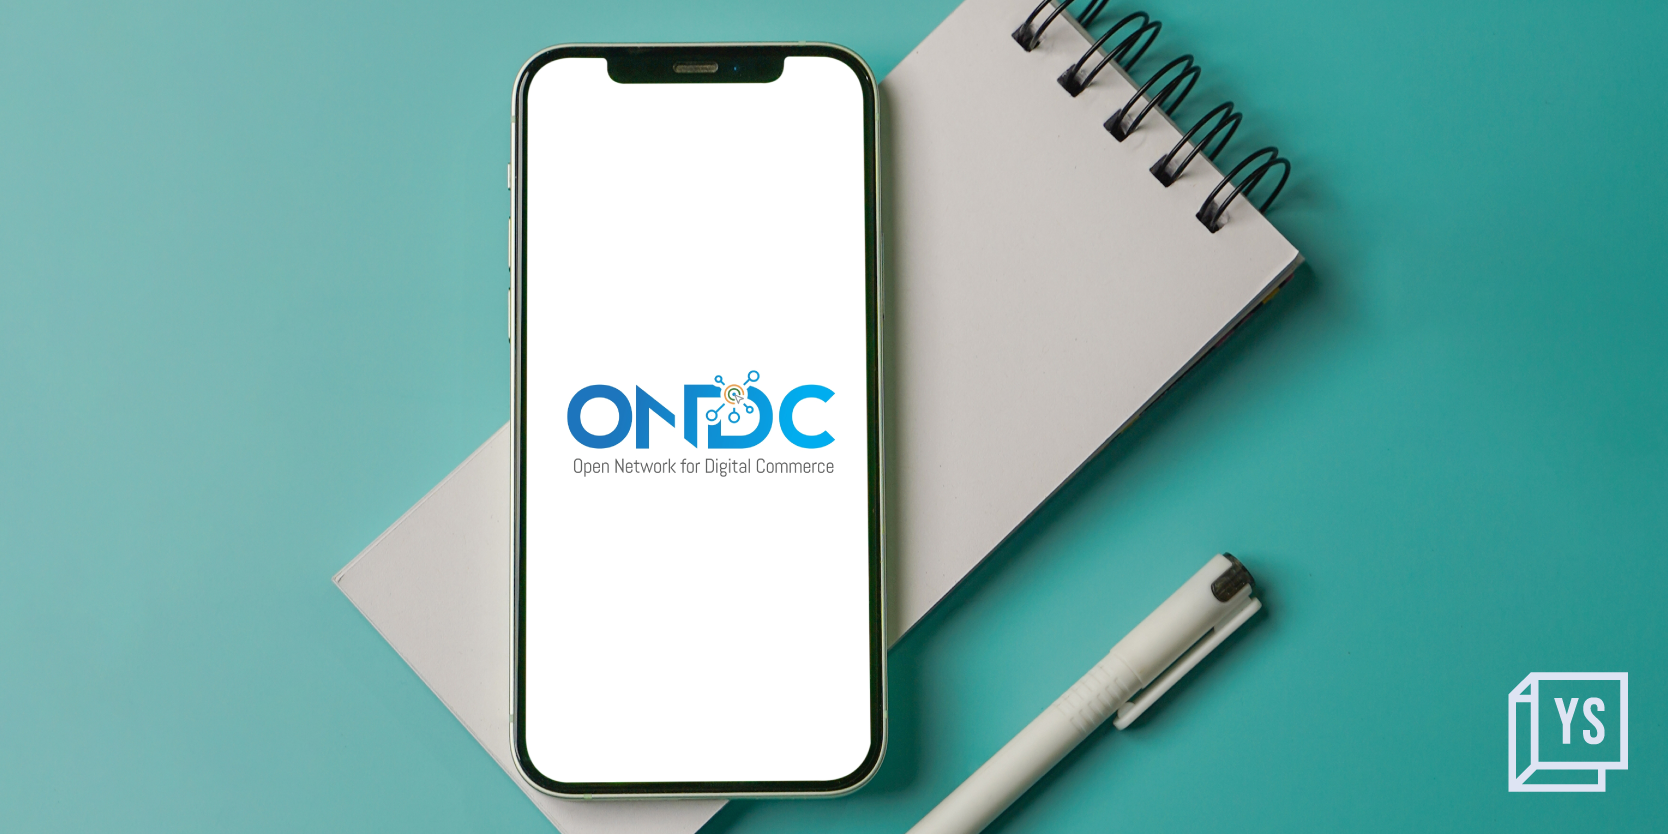 Media firm Jagran Prakashan’s digital vertical to launch buyer app on ONDC soon: Source